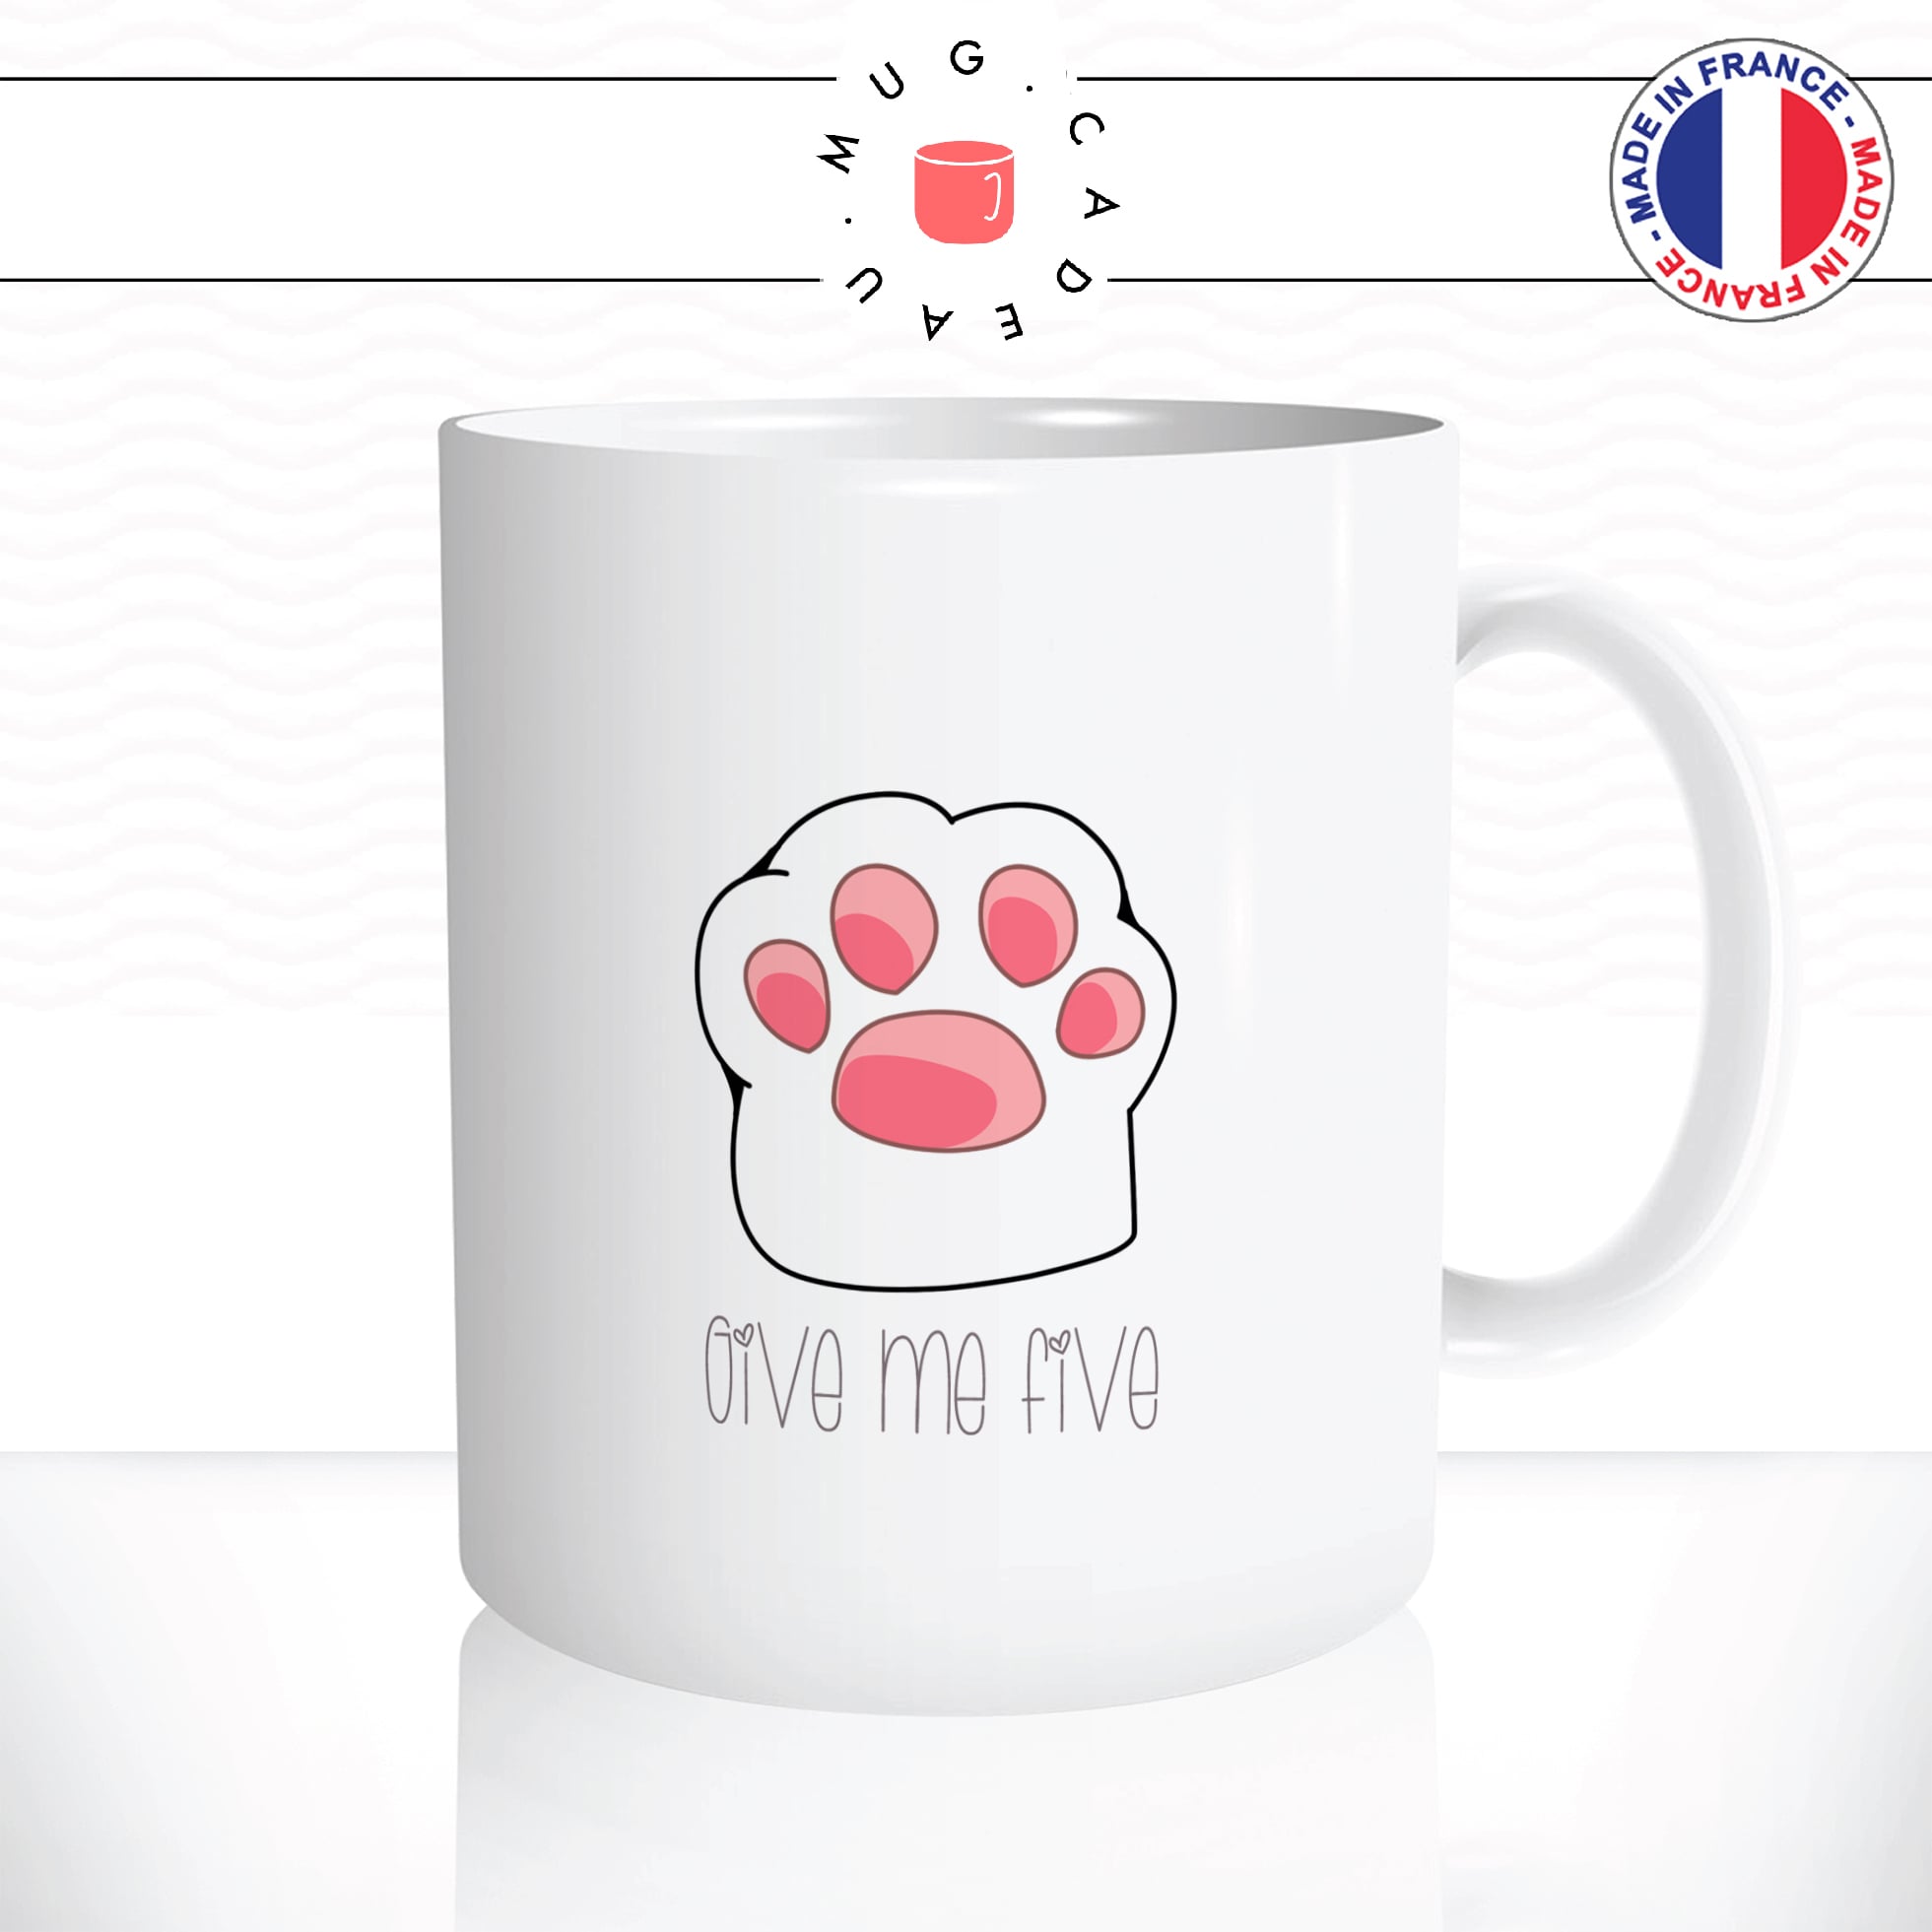 mug-tasse-chat-chaton-blanc-cat-patte-paw-give-me-five-top-la-drole-humour-idee-cadeau-cool-fun-original-personnalisé